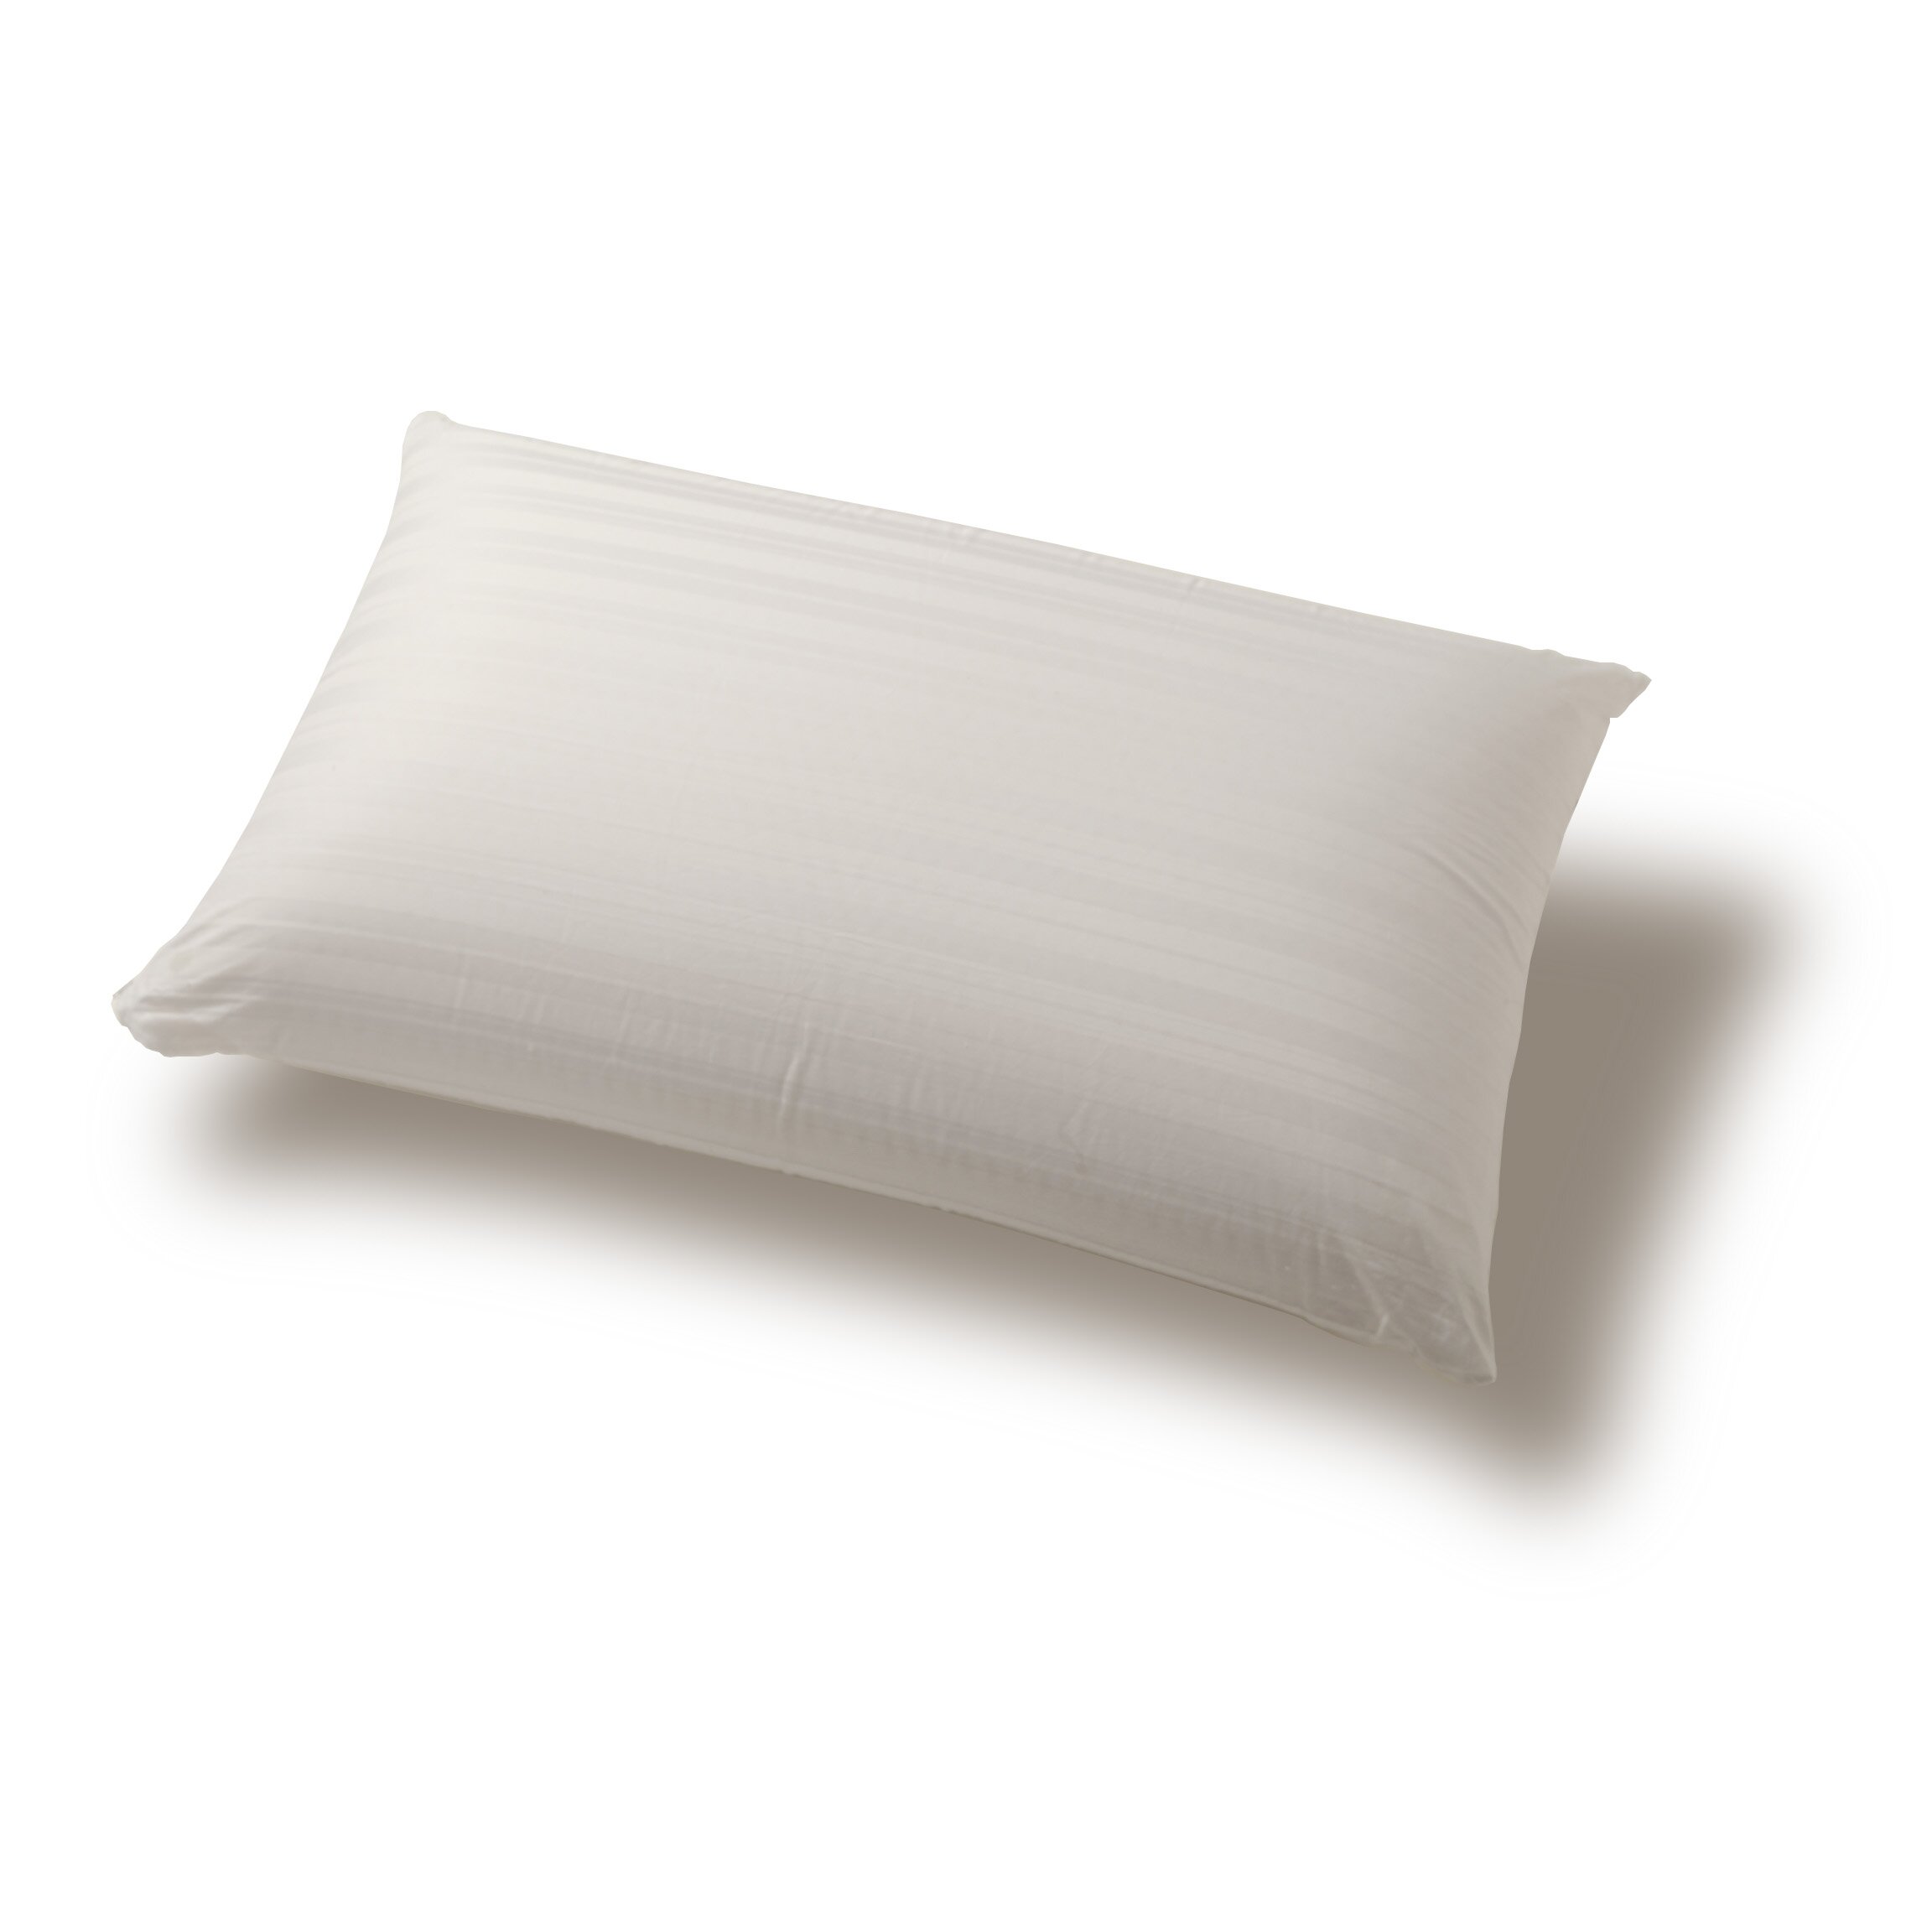 Talalay Latex Foam Pillows 14